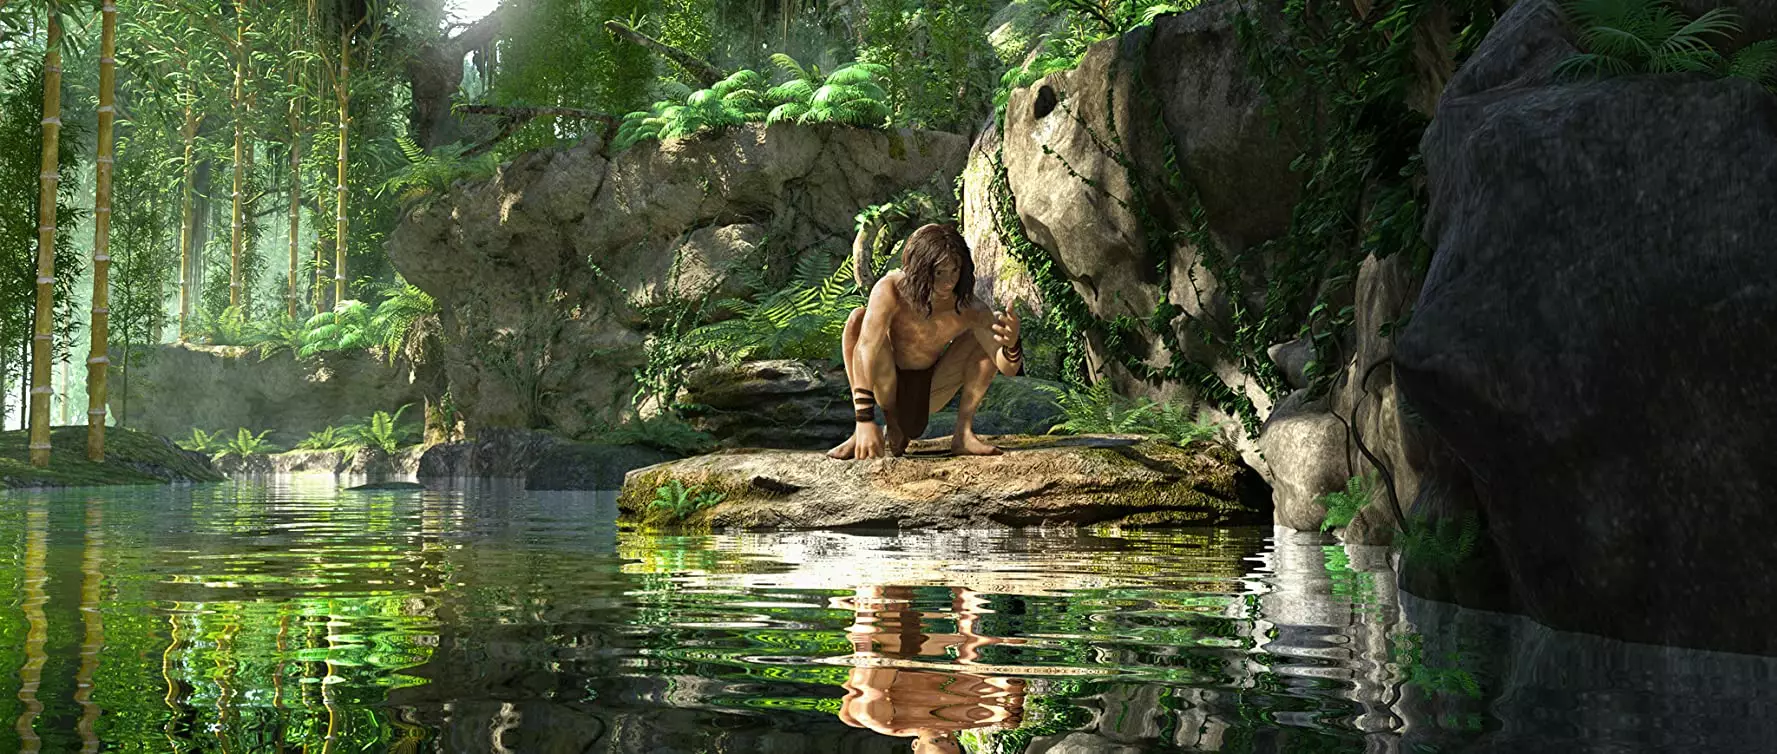 Кадр из мультфильма "Тарзан"